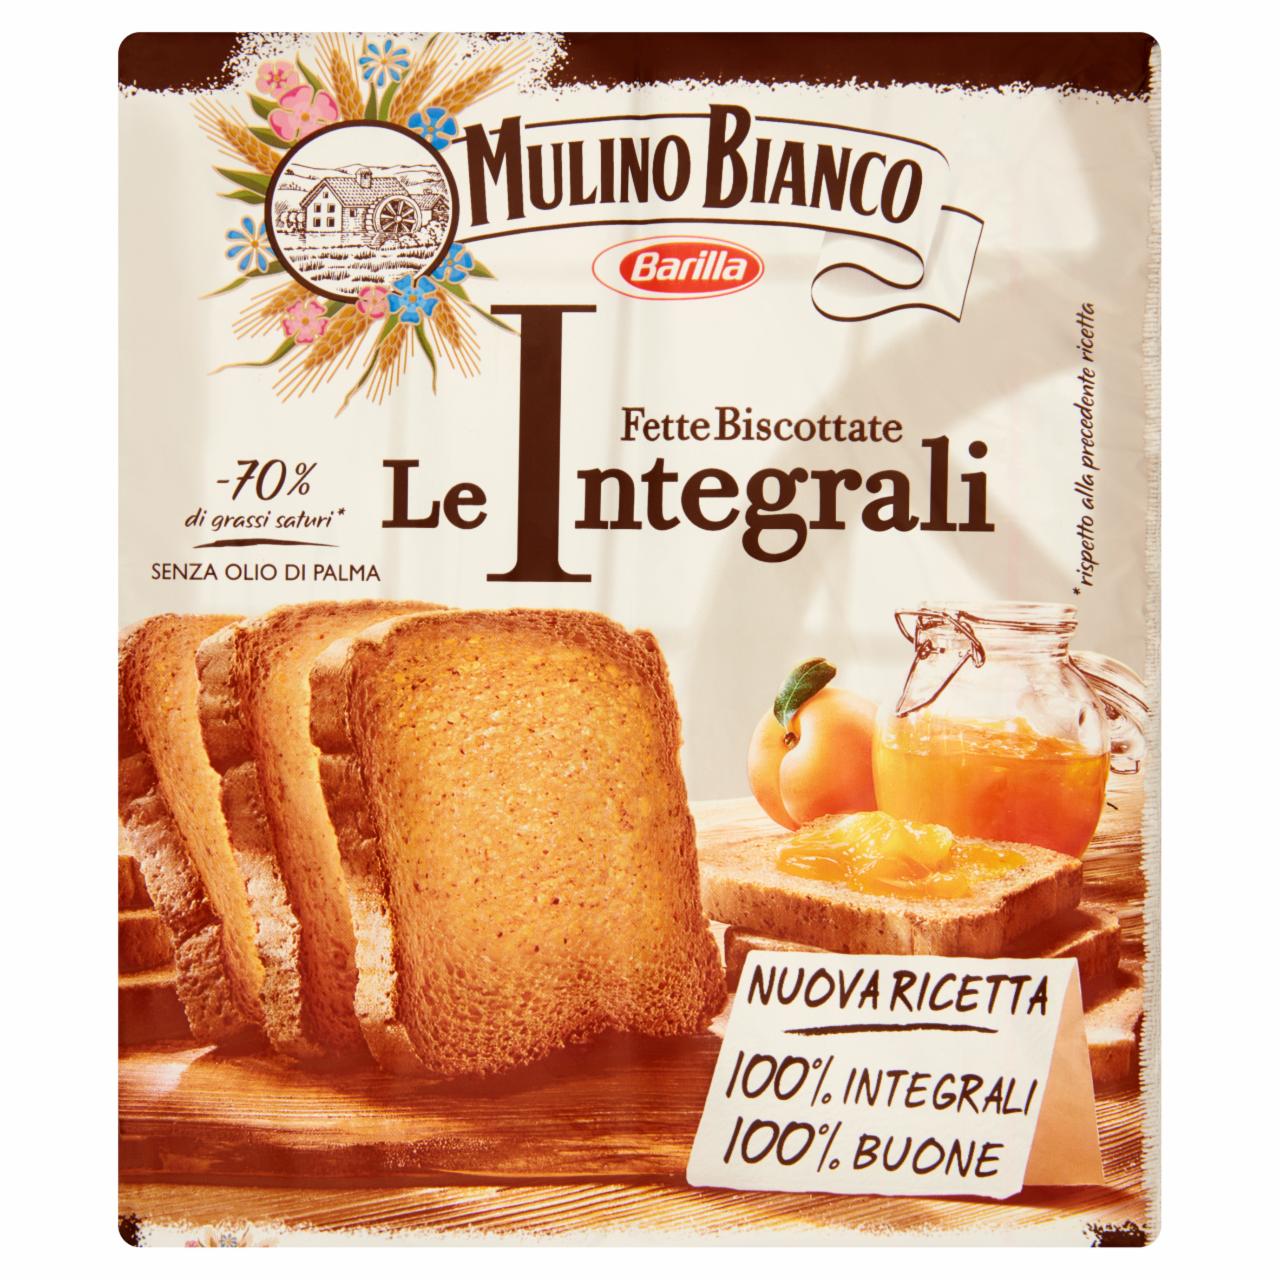 Képek - Barilla Mulino Bianco Fette Biscottate Integrali teljes kiőrlésű kétszersült 315 g